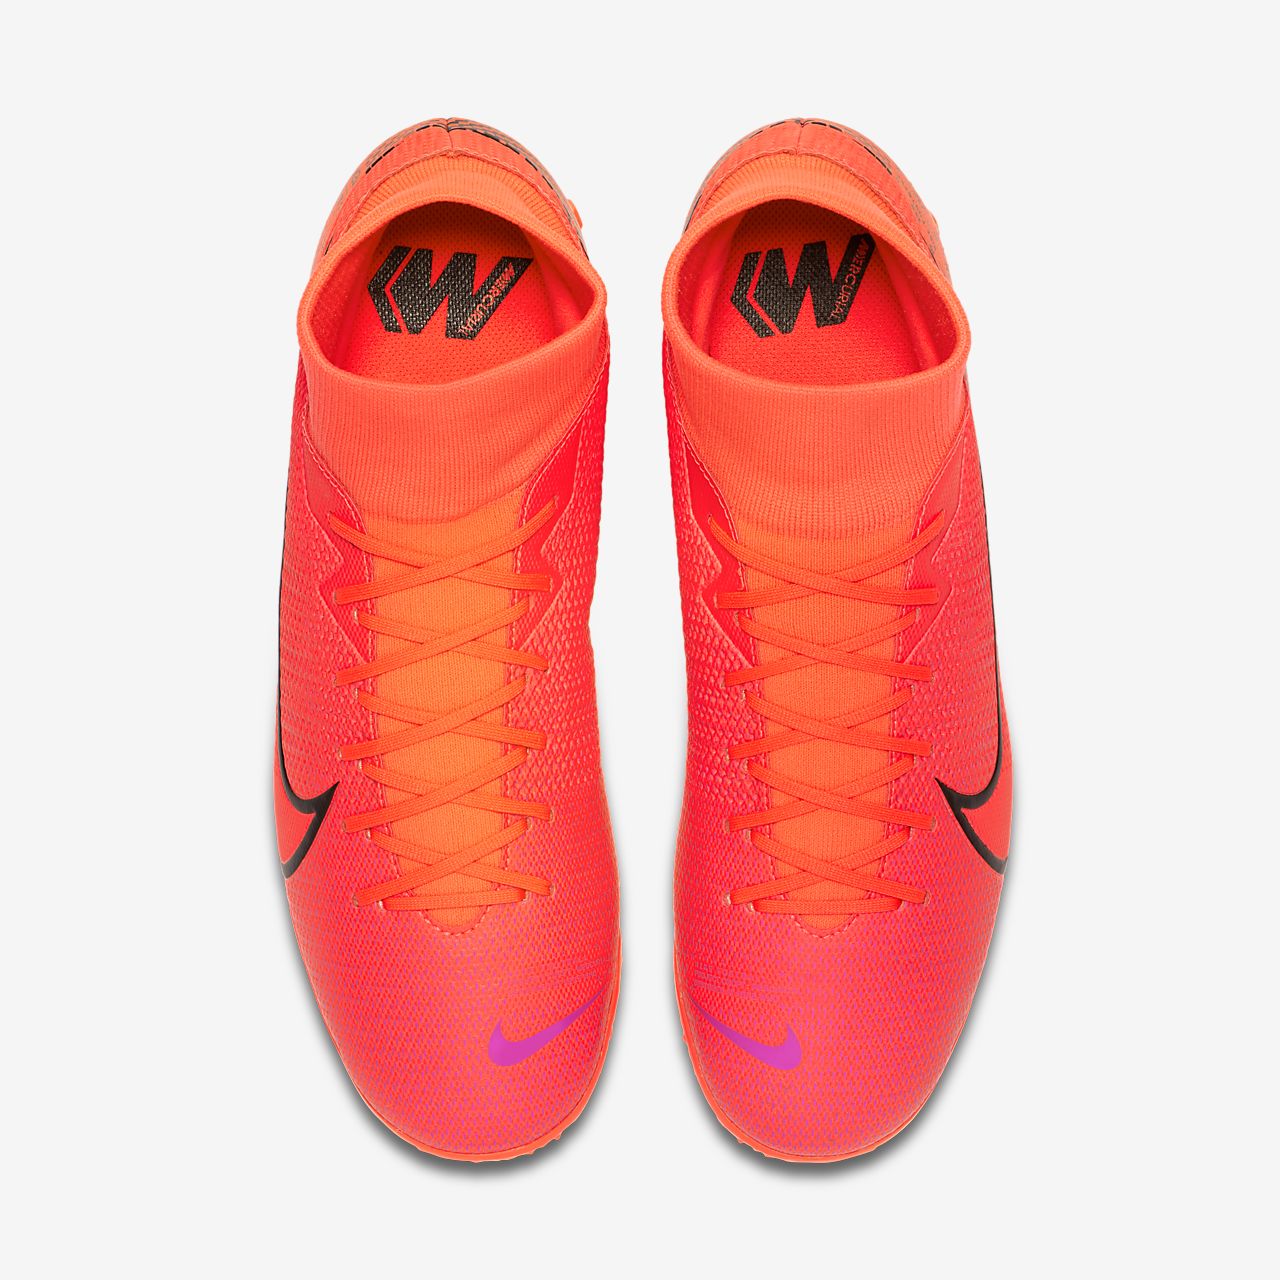 Nike Mercurial Superfly 6 Elite FG New Mens Cleats Orange